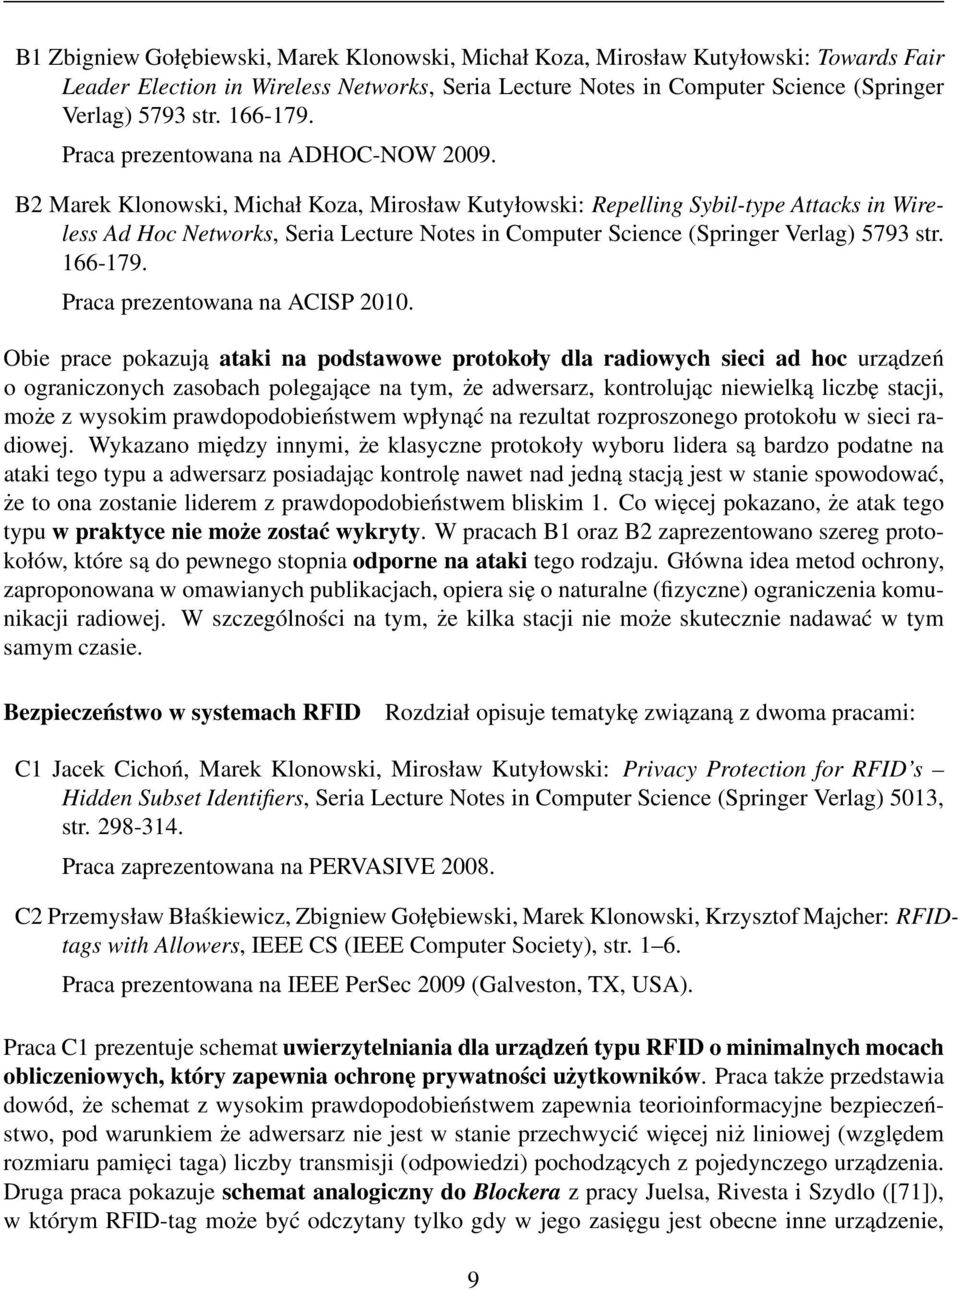 B2 Marek Klonowski, Michał Koza, Mirosław Kutyłowski: Repelling Sybil-type Attacks in Wireless Ad Hoc Networks, Seria Lecture Notes in Computer Science (Springer Verlag) 5793 str. 166-179.